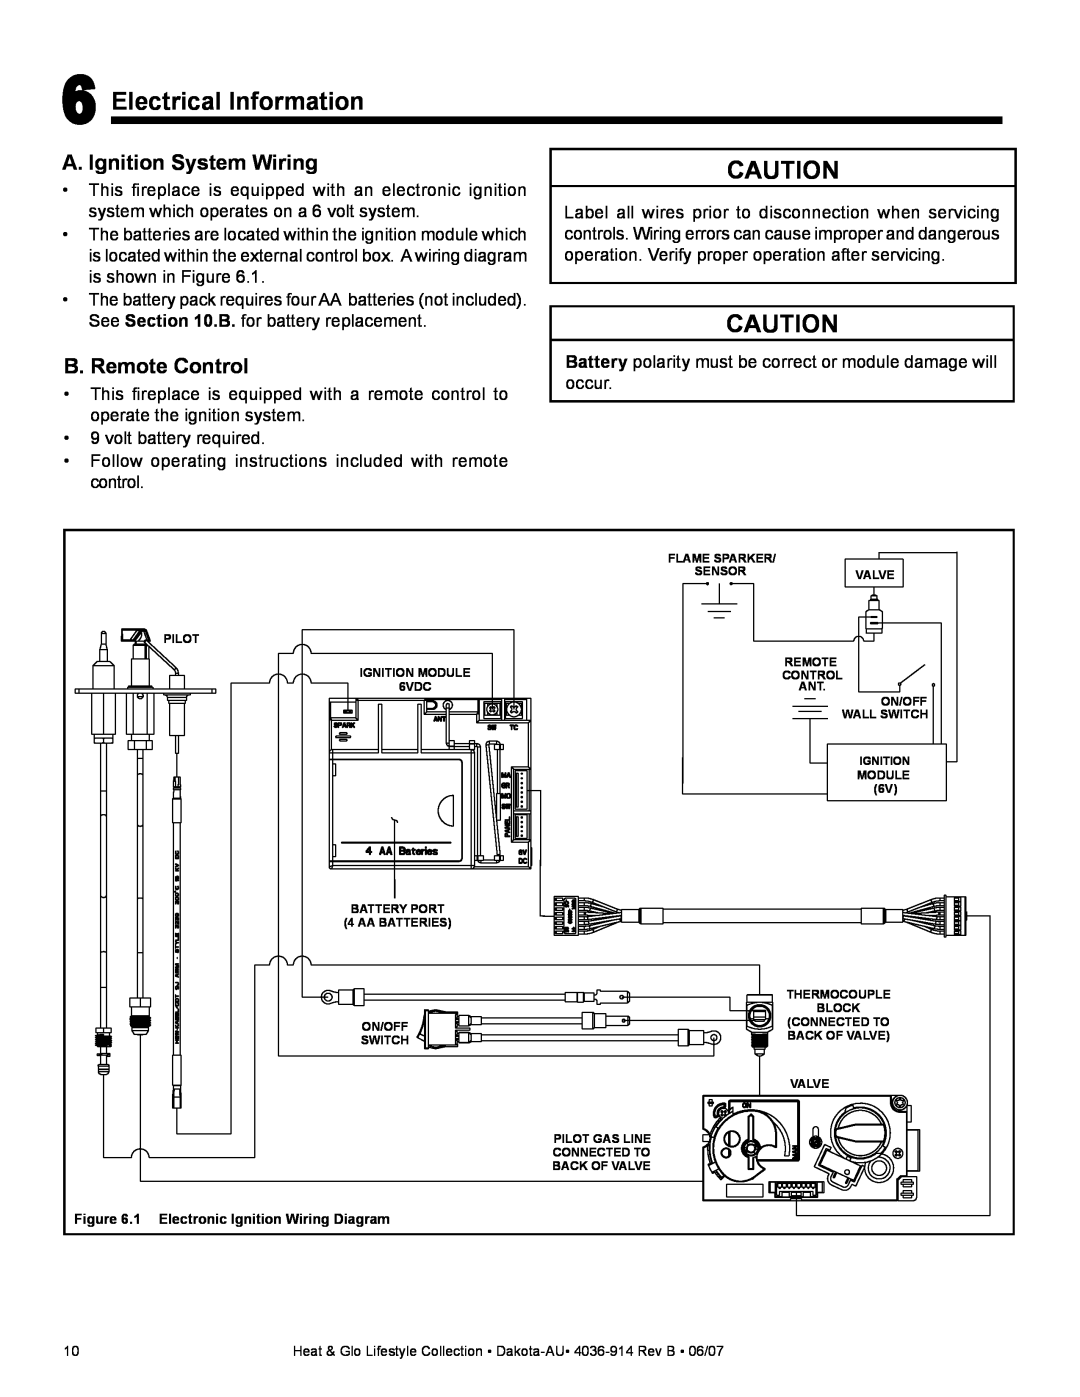 Heat & Glo LifeStyle DAKOTA-AU manual Electrical Information, A. Ignition System Wiring, B.Remote Control 